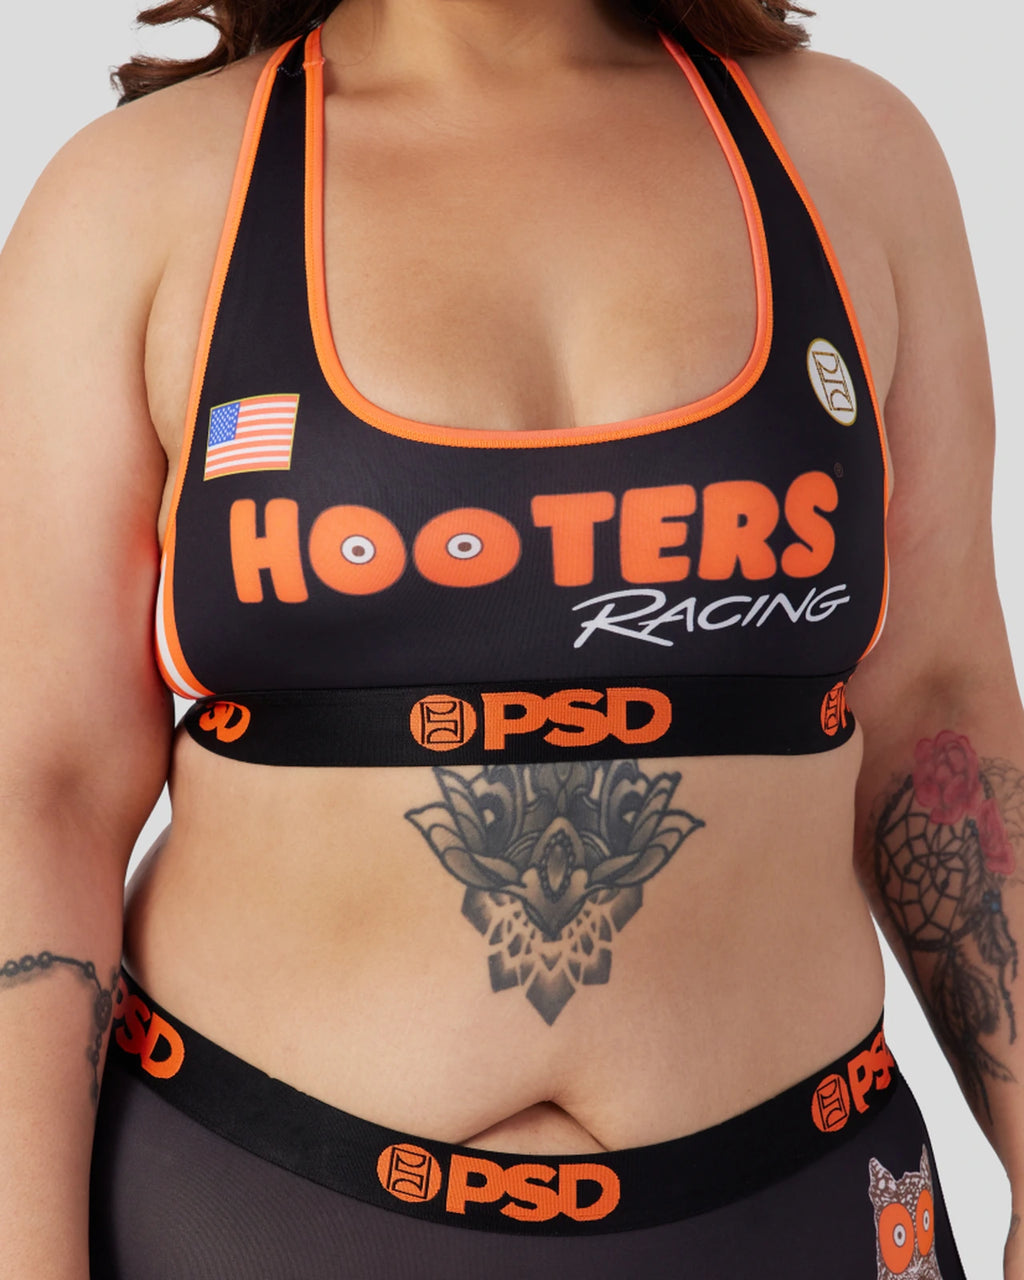 Hooters - Racing, Sports Bra